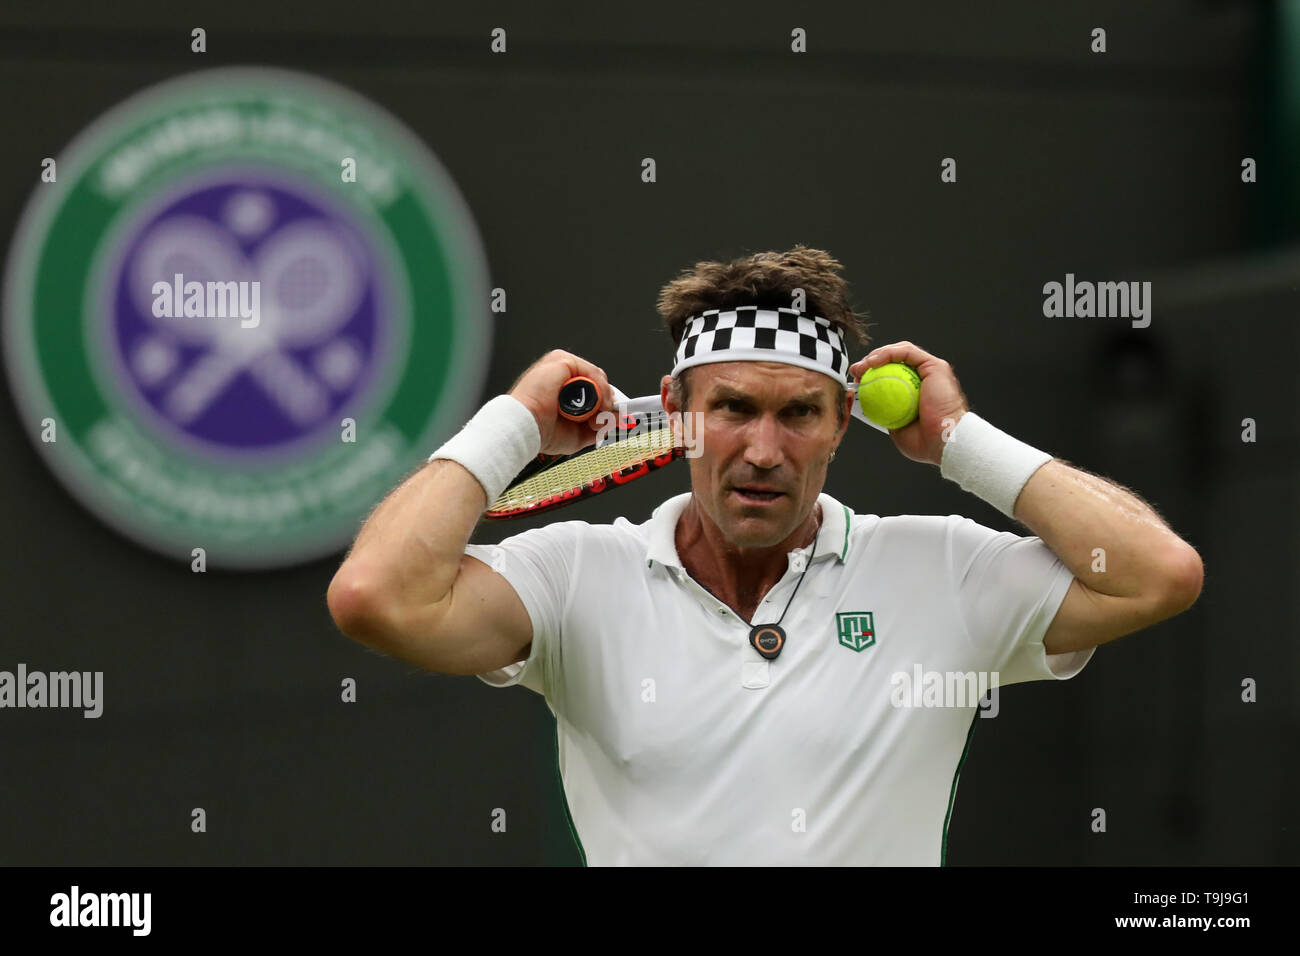 London, Großbritannien. 19. Mai 2019. Wimbledon Tennis Spieler Tag; Pat Cash (AUS) stellt den Kopf band Credit: Aktion Plus Sport Bilder/Alamy leben Nachrichten Stockfoto